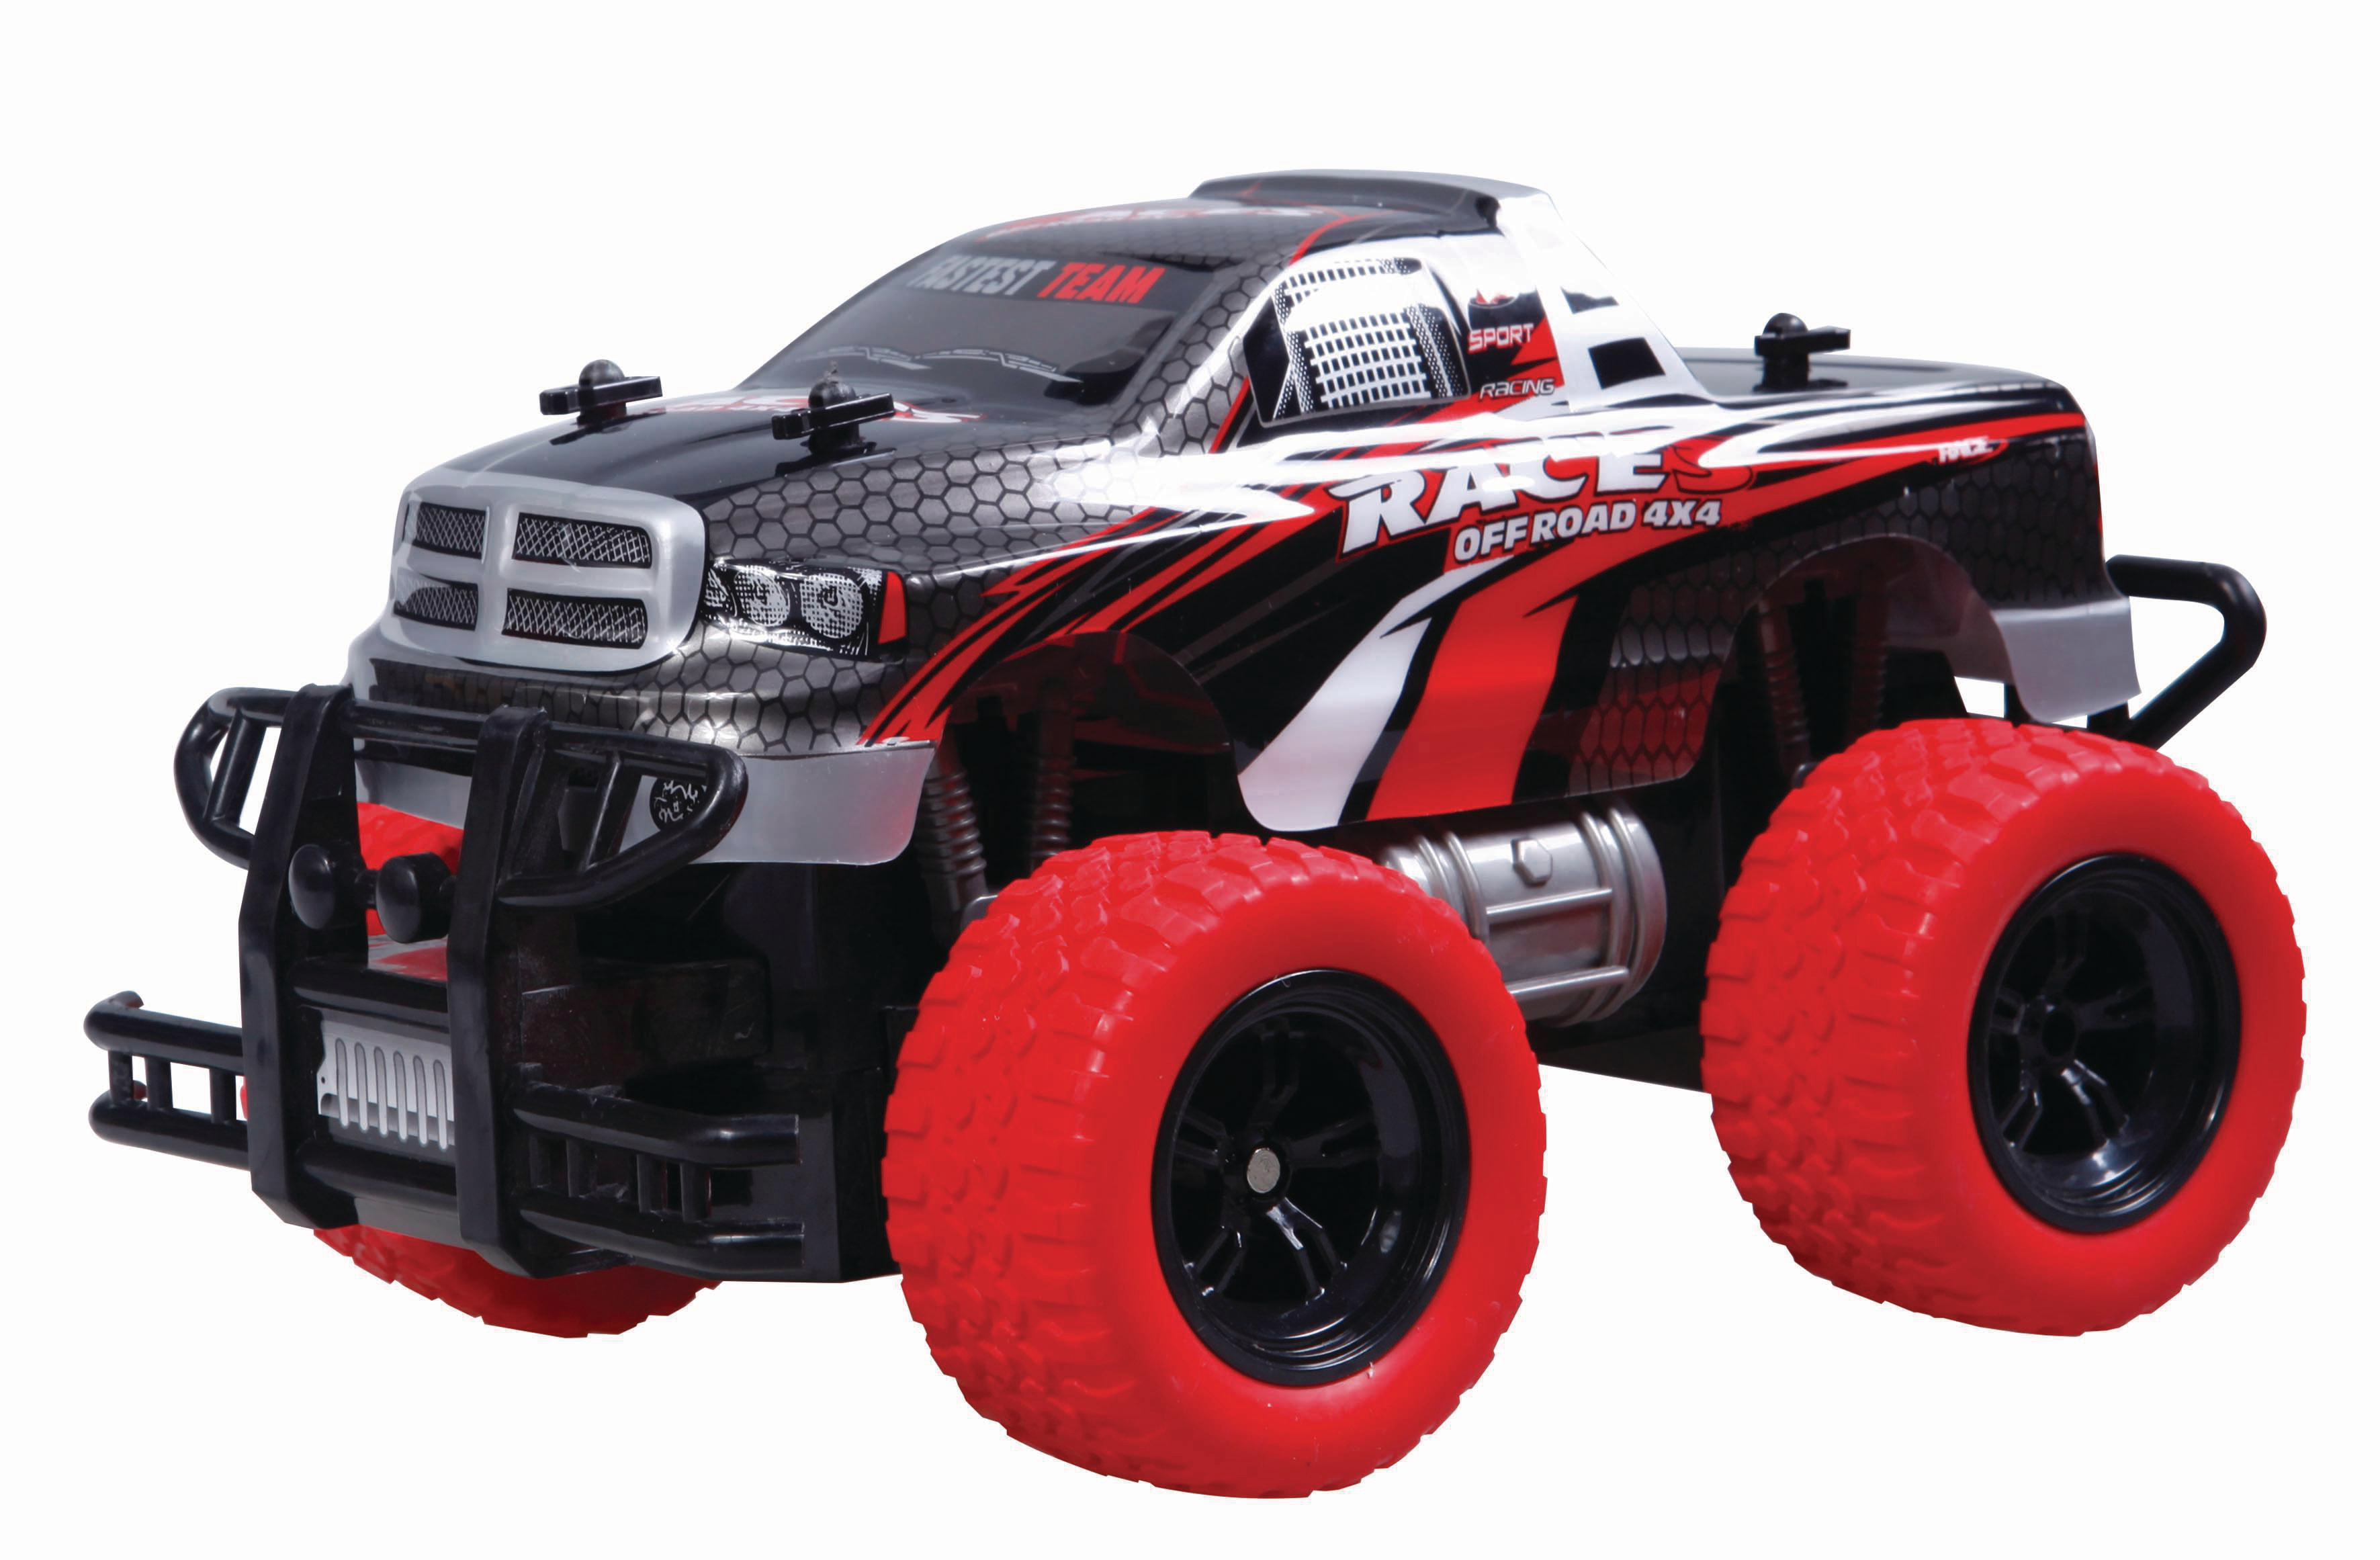 RACER 33761015 Racer GHz Truck R/C Mehrfarbig Monster Spielzeugauto, R/C 2.4